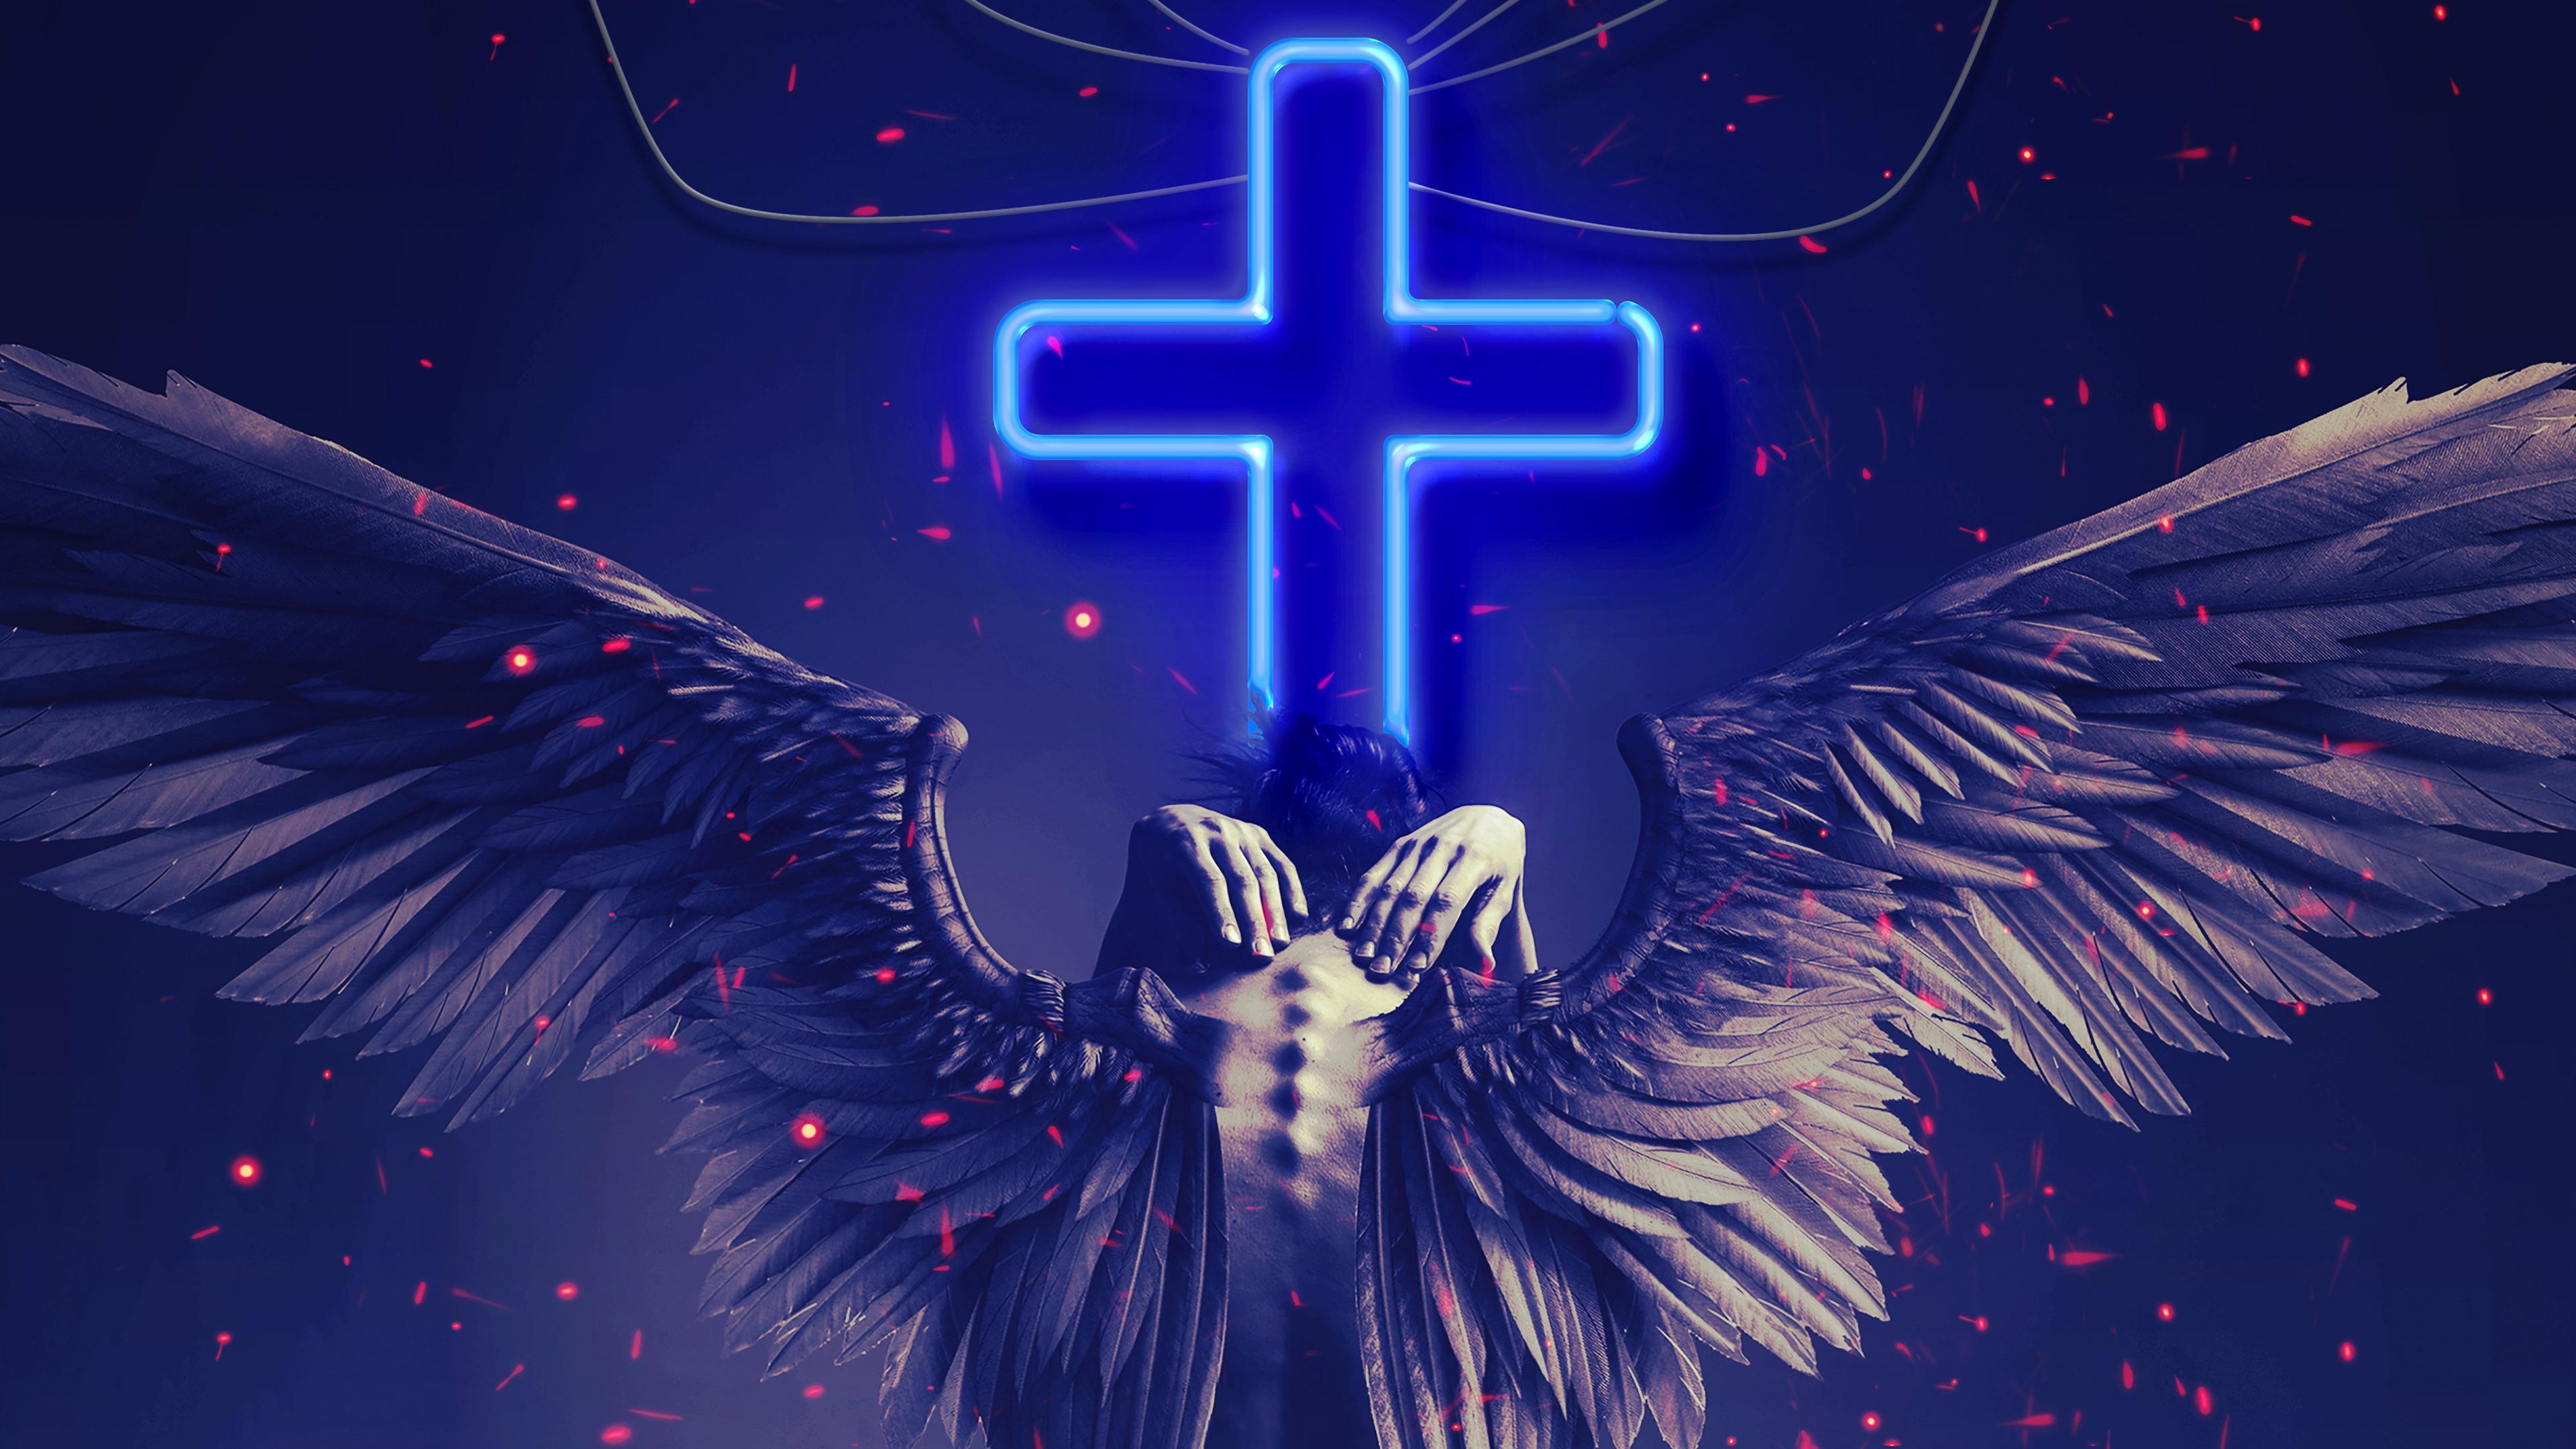 Broken Angel, HD Artist, 4k Wallpaper, Image, Background